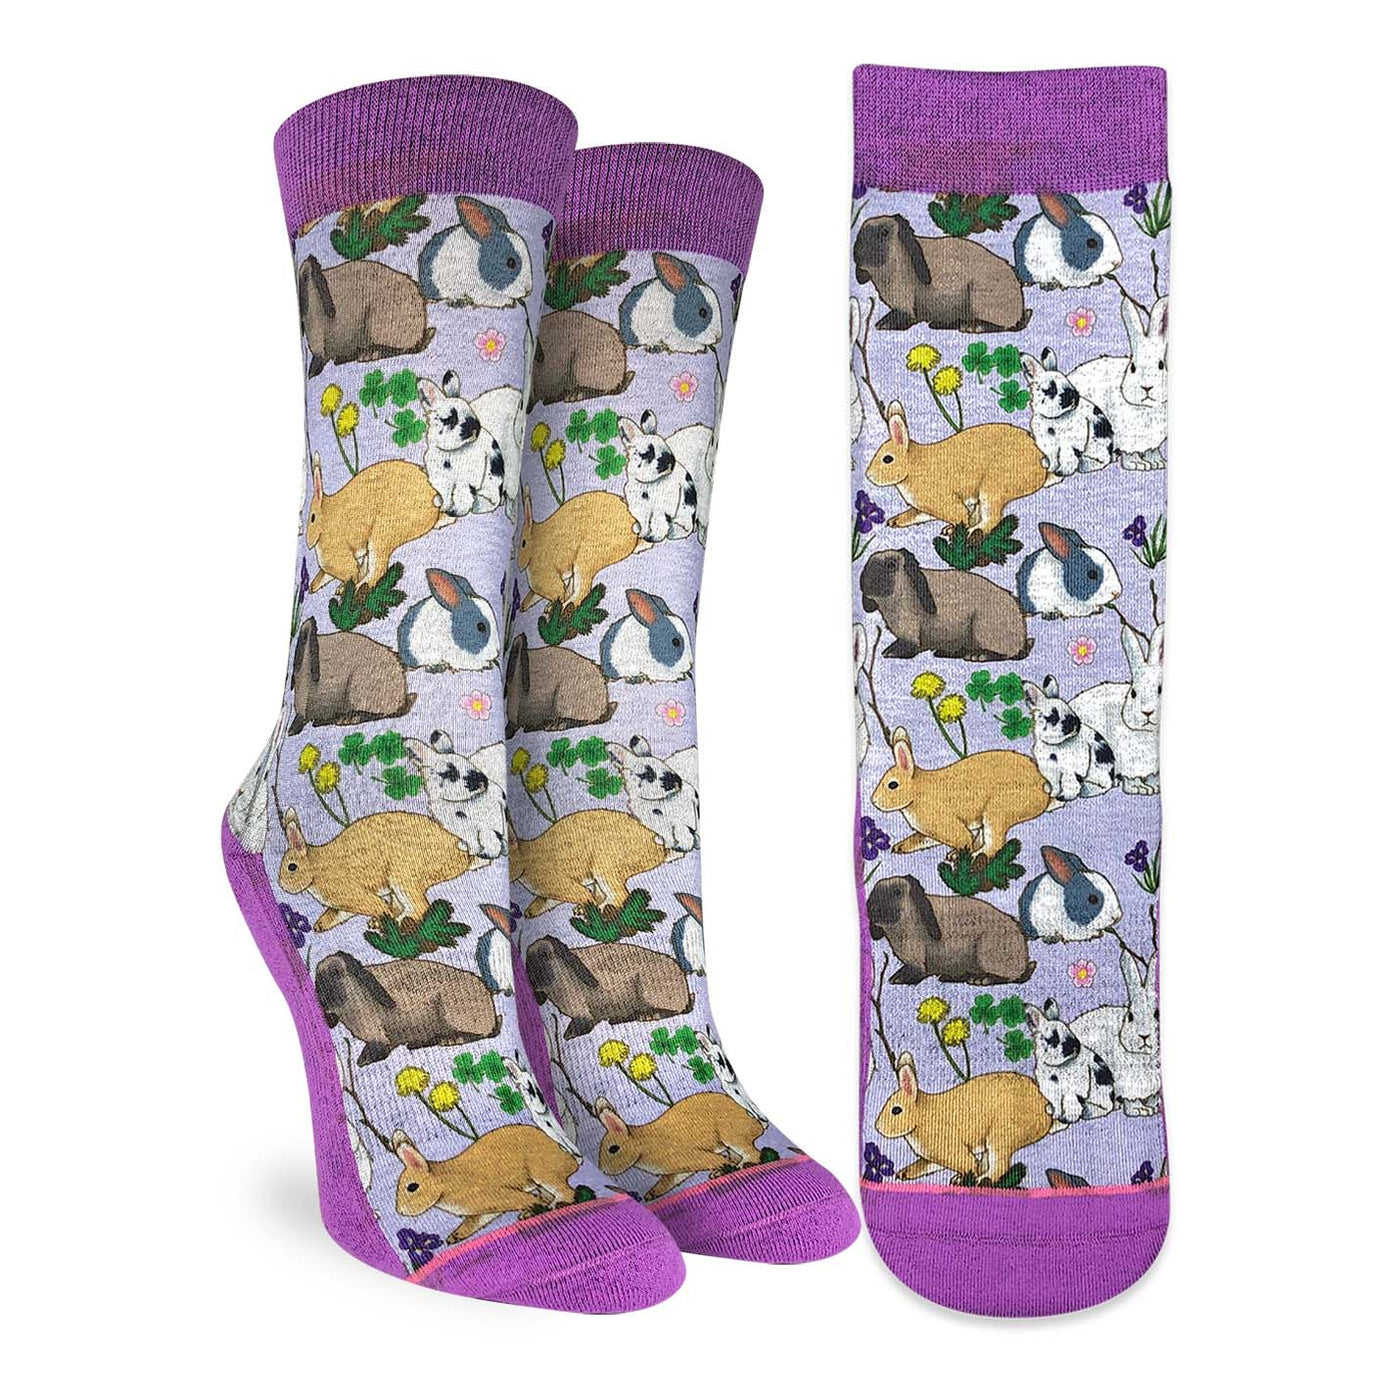 animal socks with bunnies